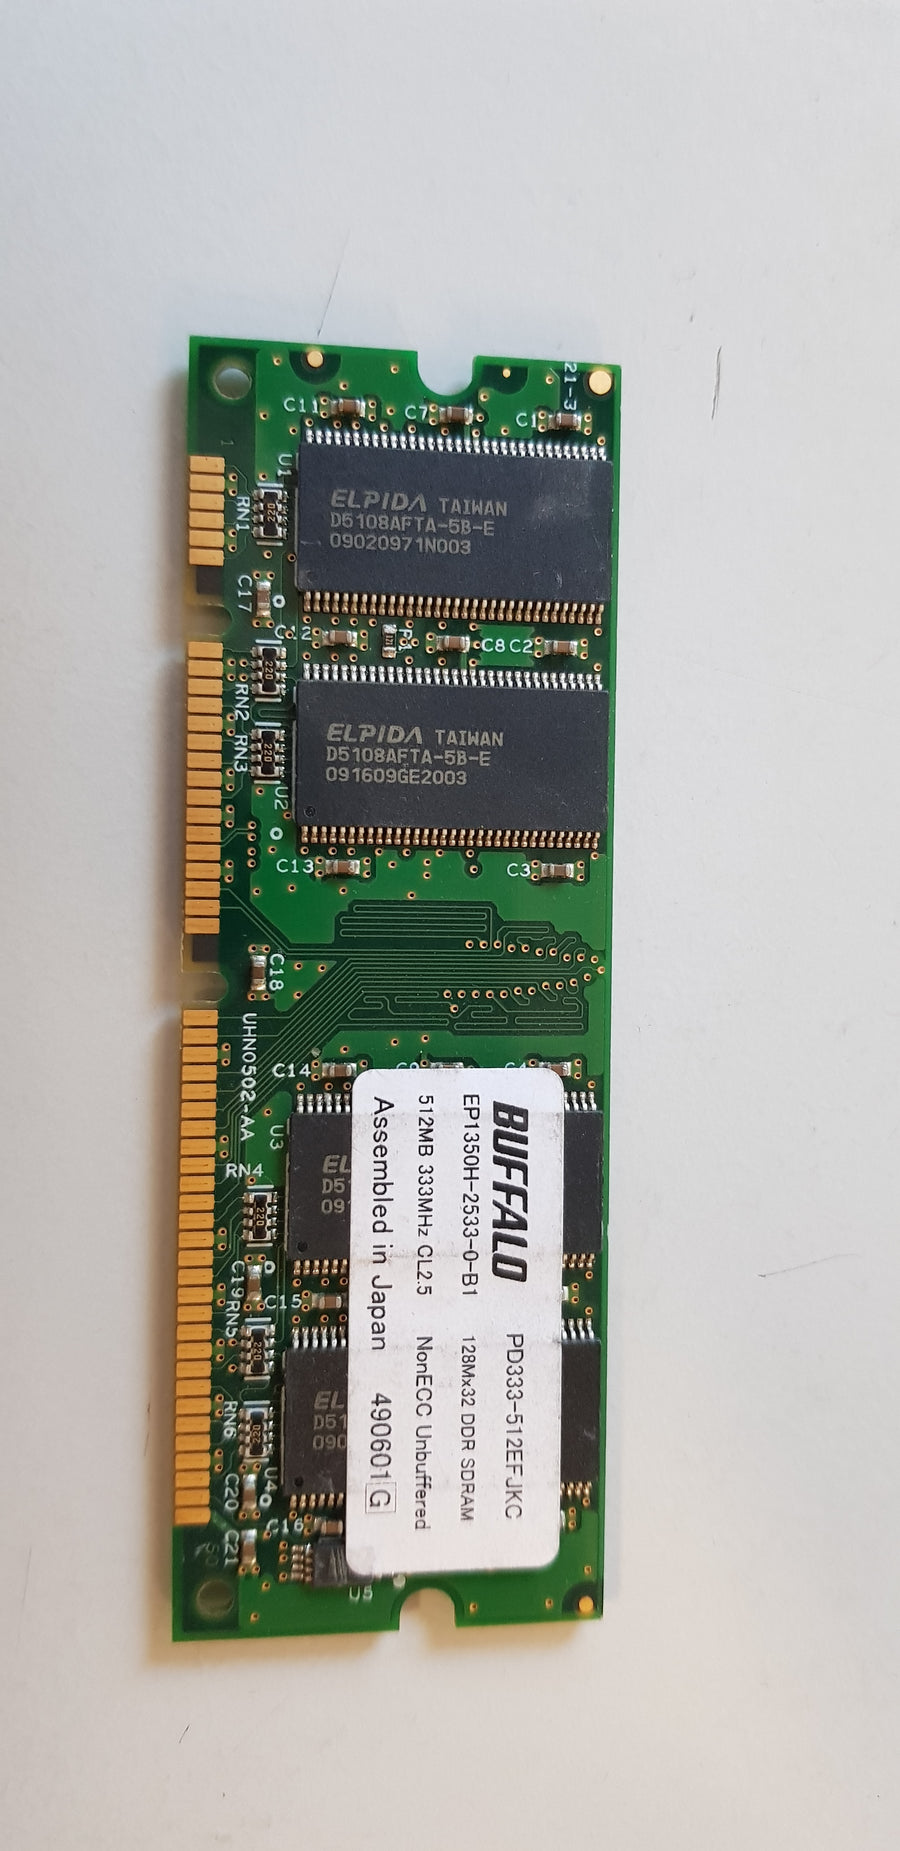 Buffalo 512MB 333MHz CL2.5 nonECC Unbuffered DDR SDRAM Memory Module (EP1350H-2533-0-B1)